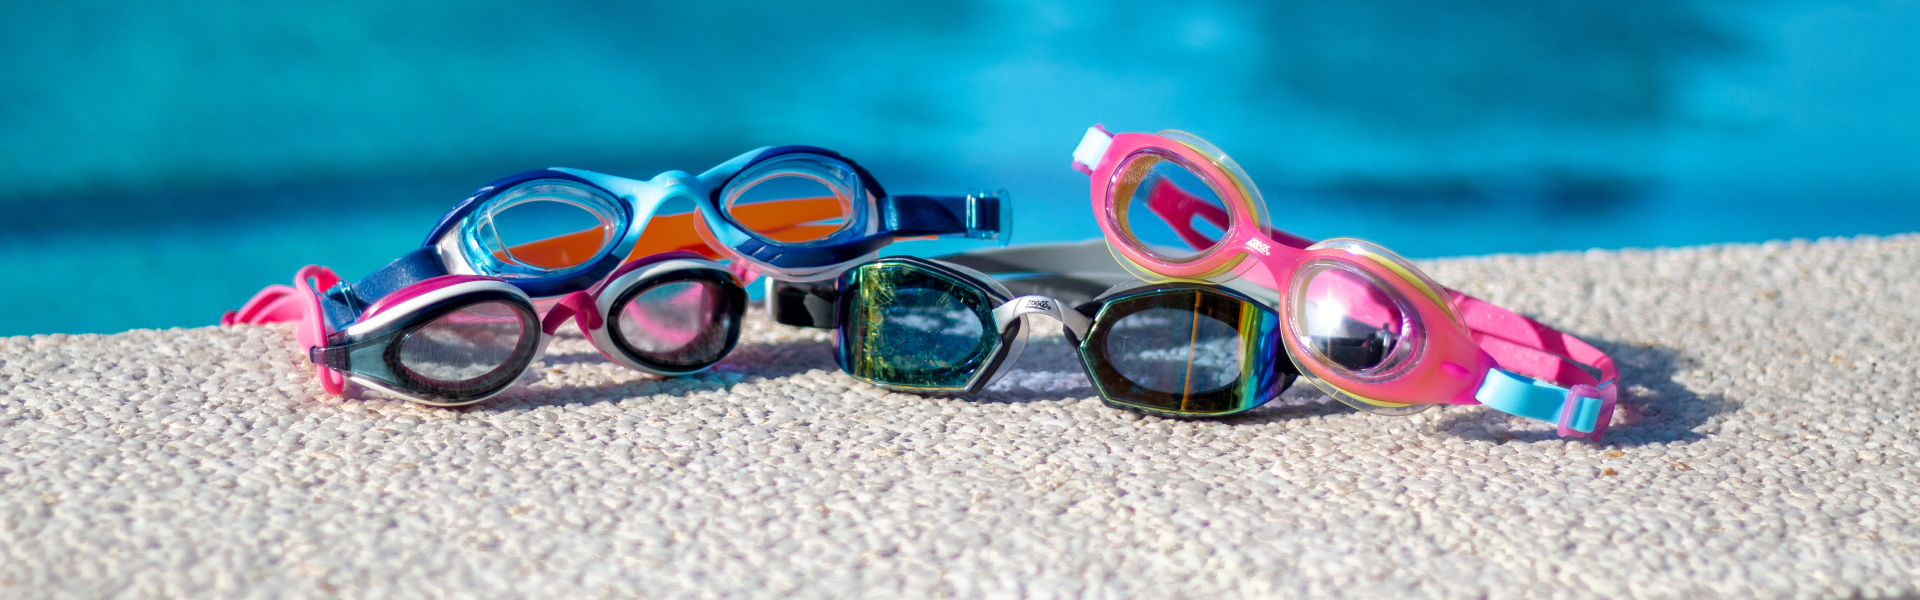 Top Open Water Goggles for Triathlon Season